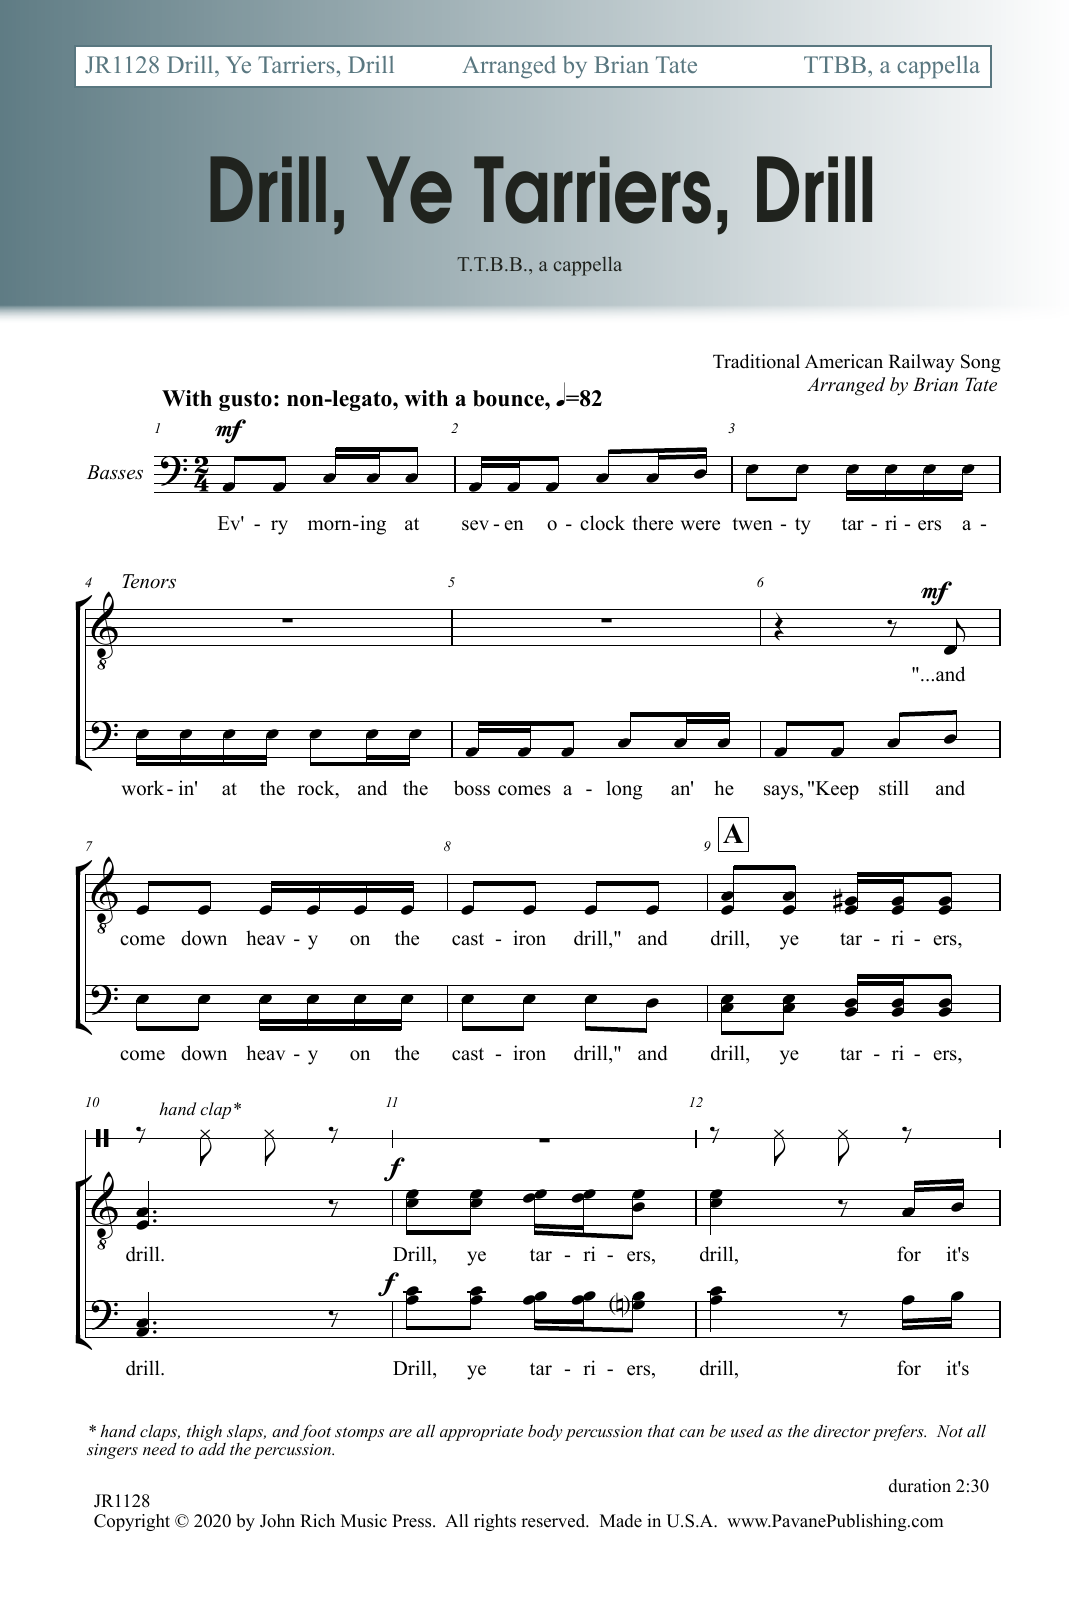 Brian Tate Drill, Ye Tarriers, Drill Sheet Music Notes & Chords for TTBB Choir - Download or Print PDF